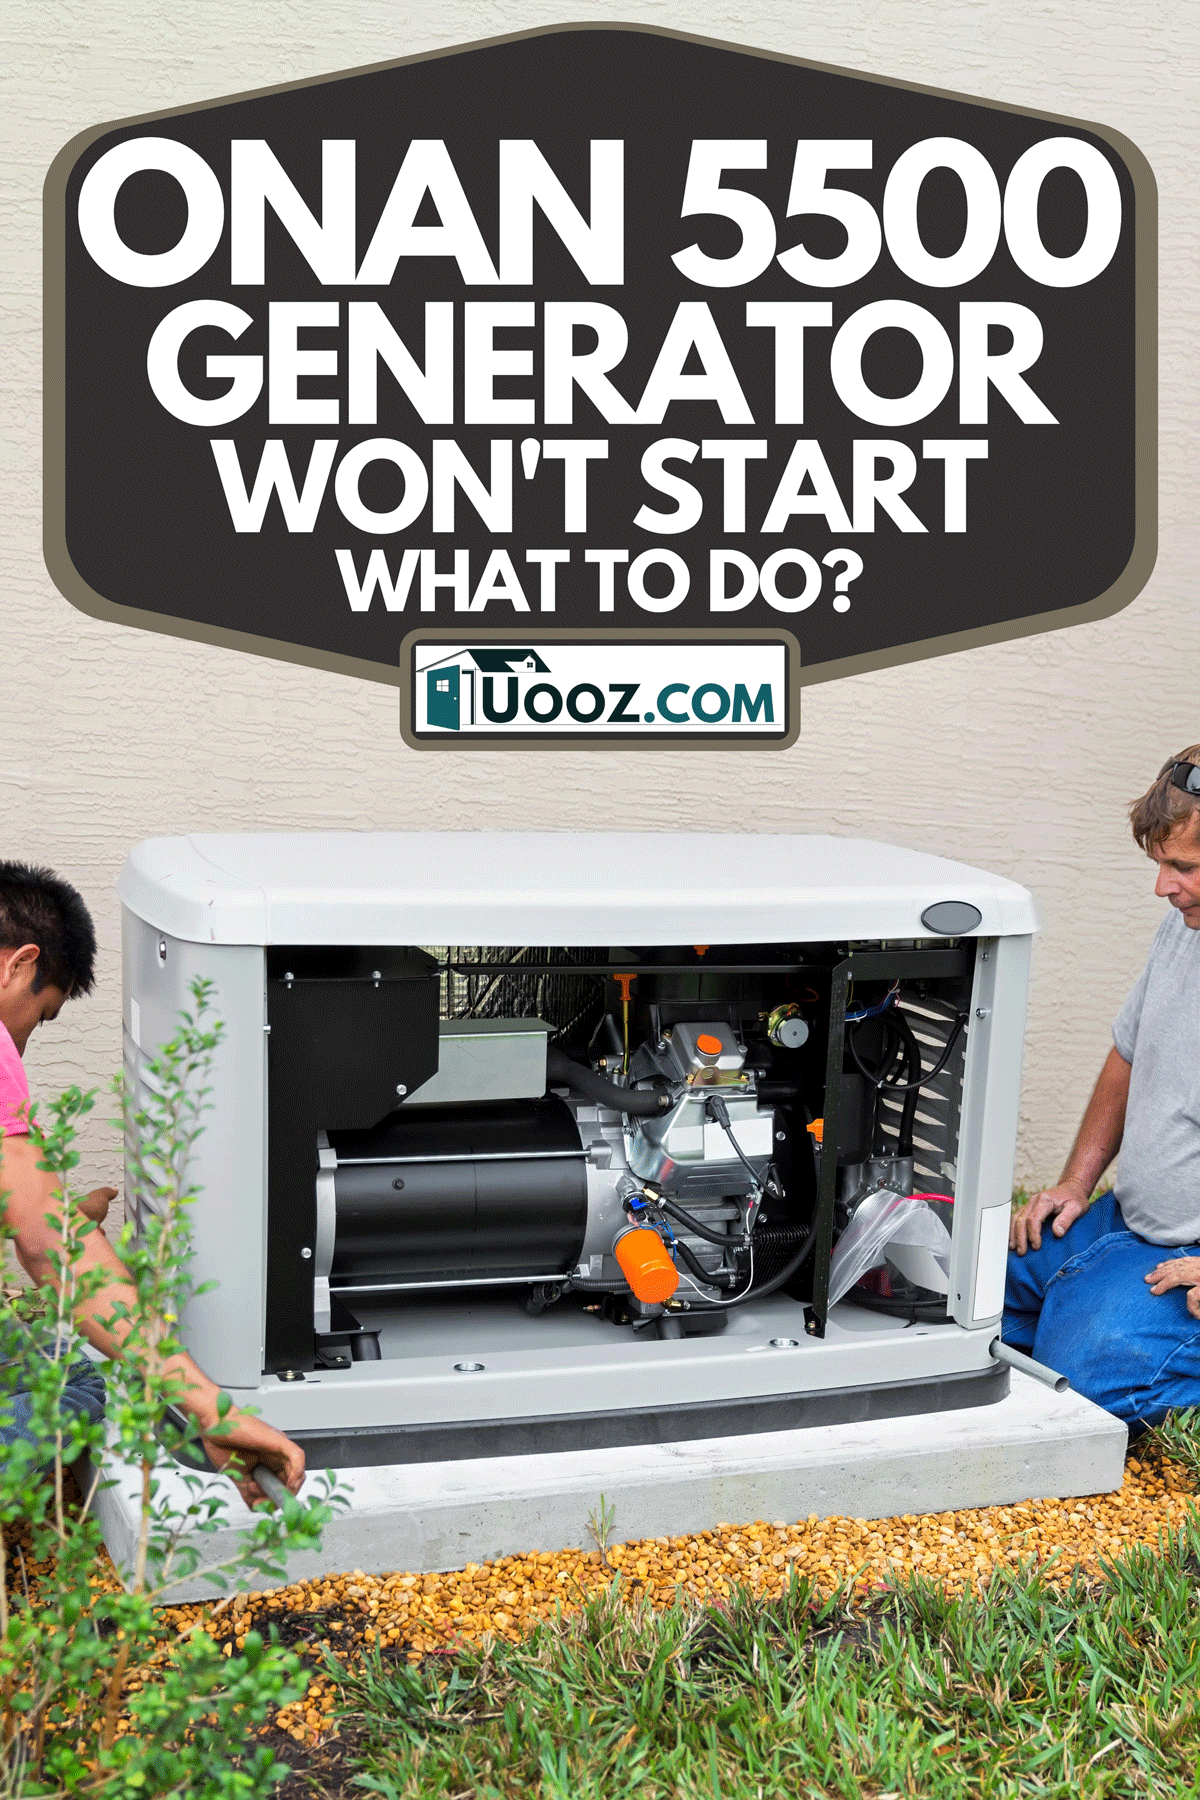 Installing a whole house emergency generator, Onan 5500 Generator Won't Start—What To Do?